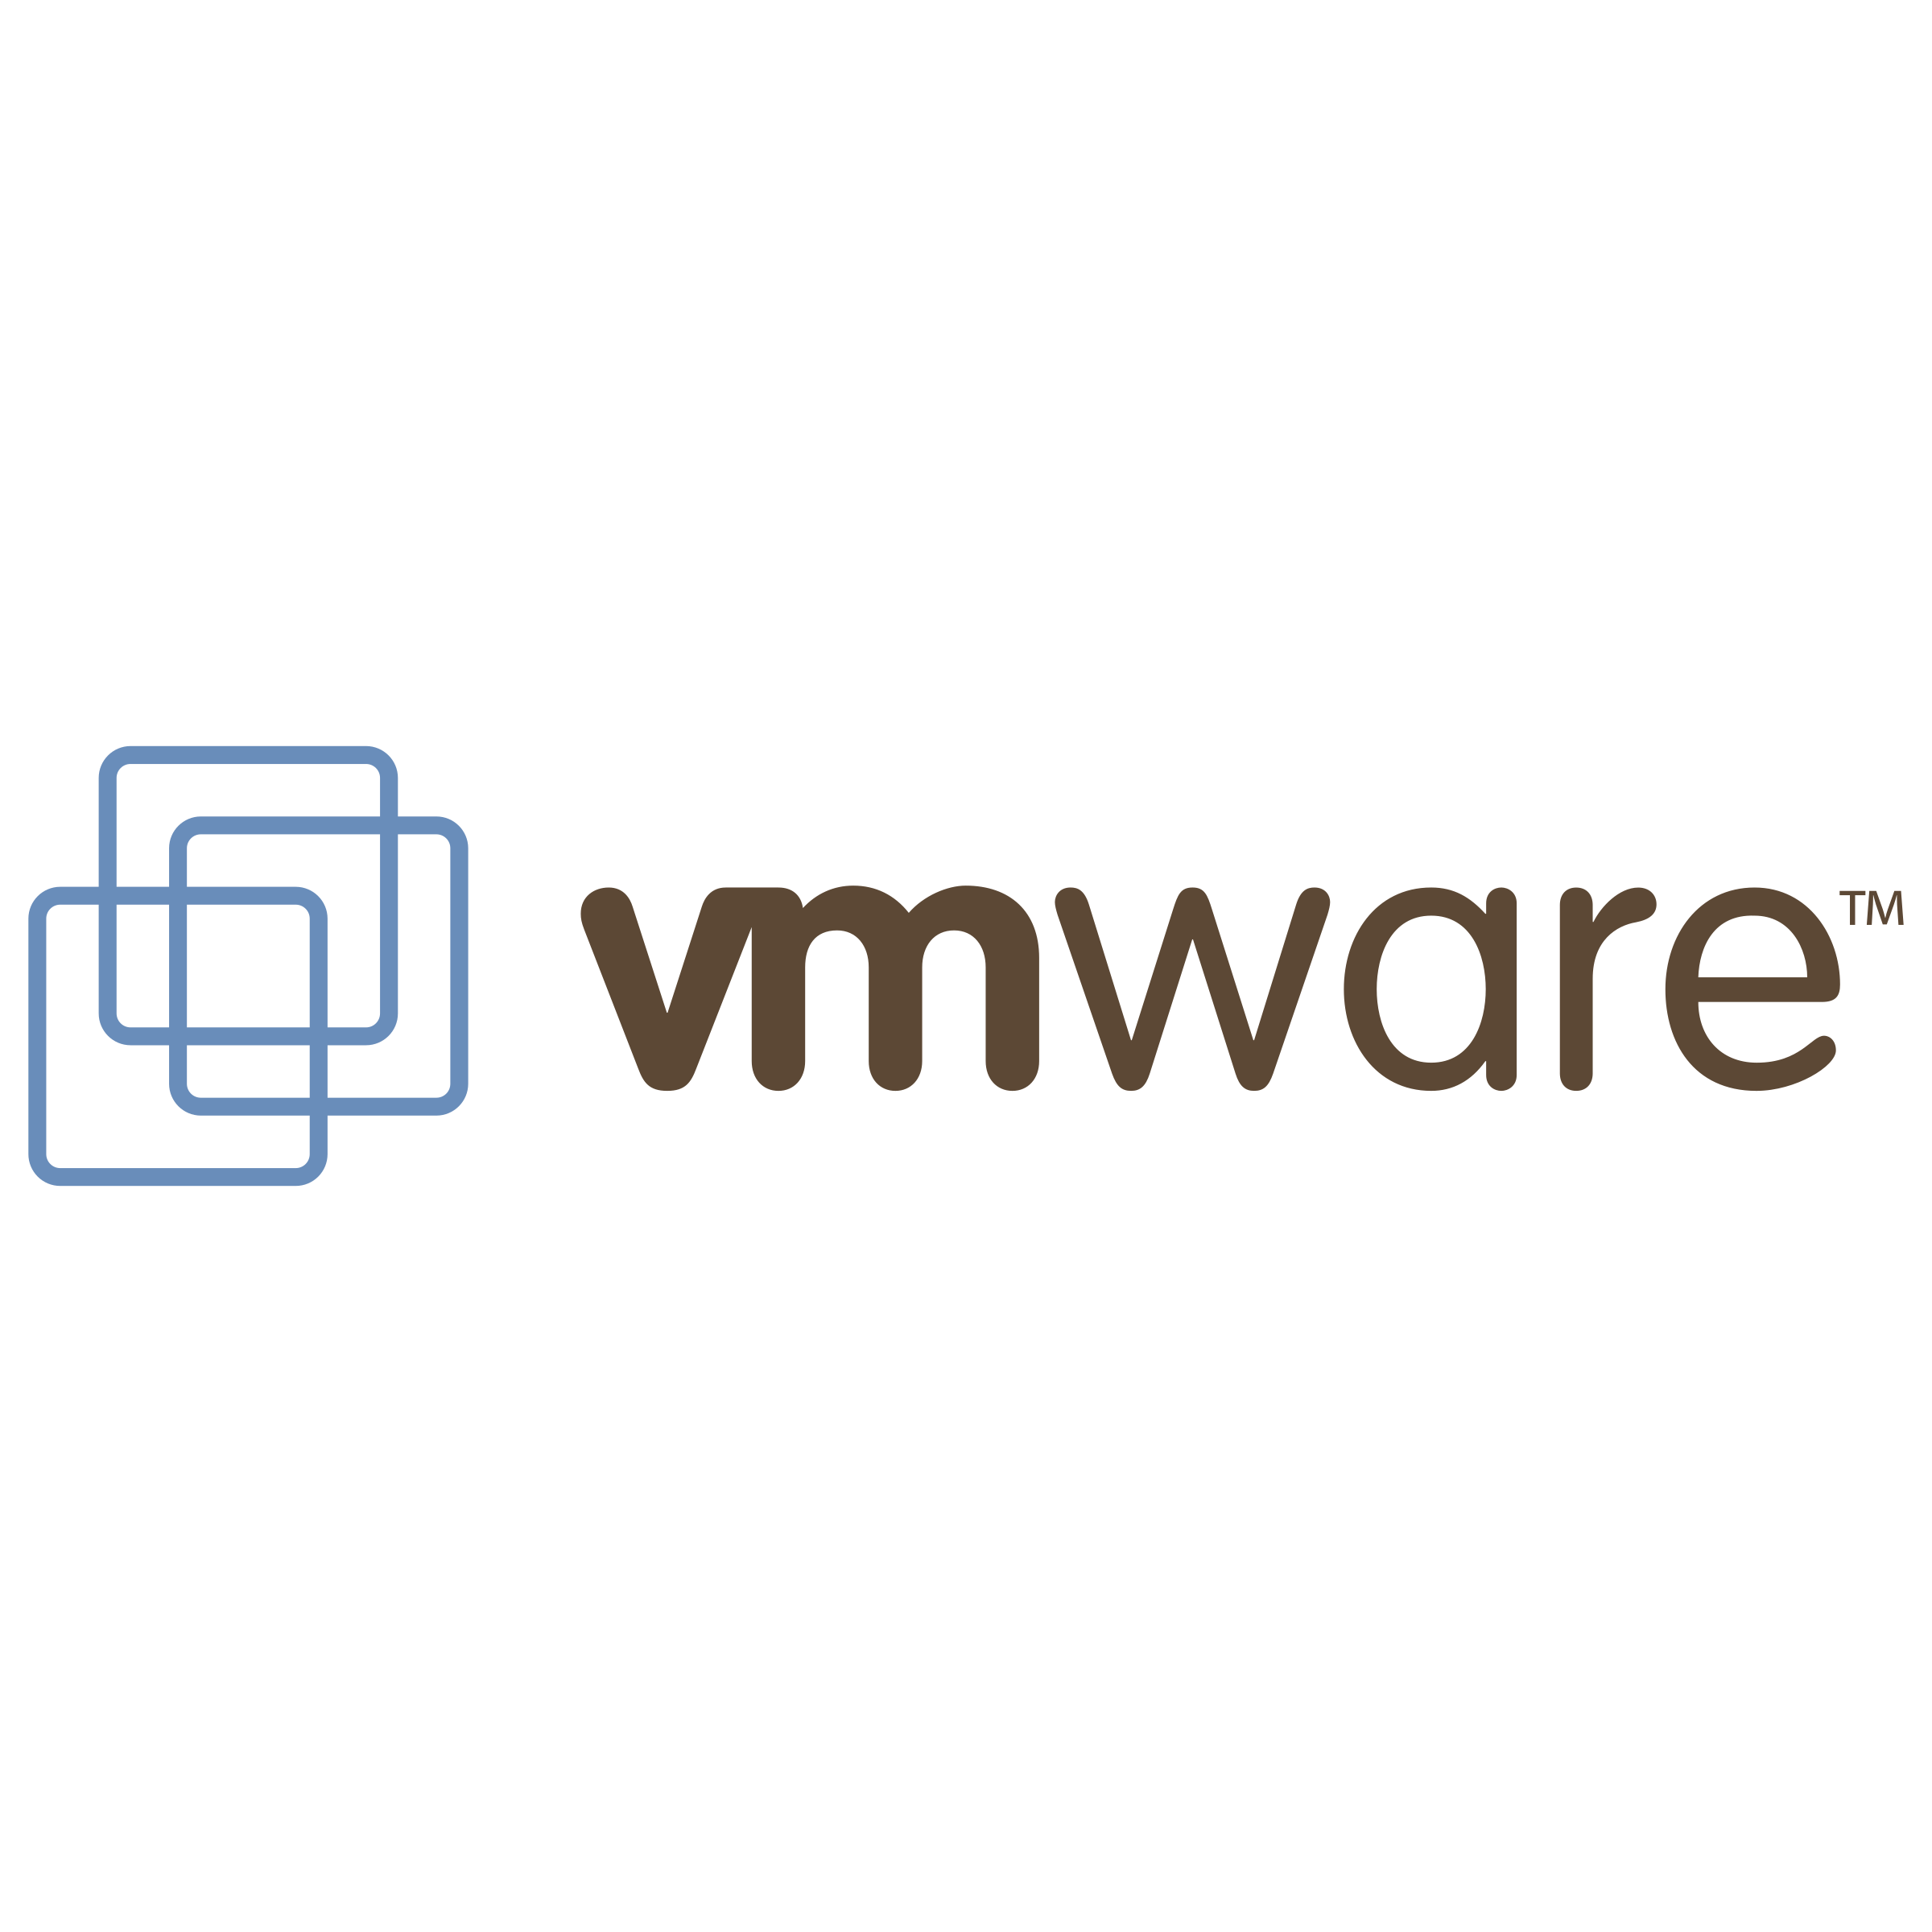 vmware-logo-png-transparent.png